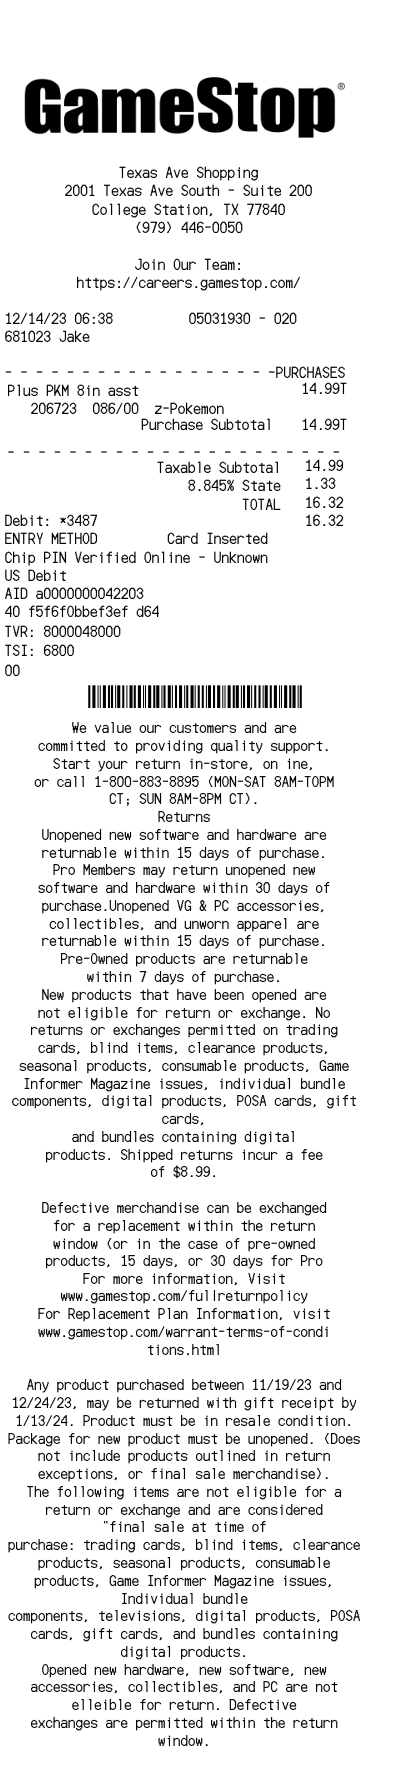 Gamestop receipt template 2